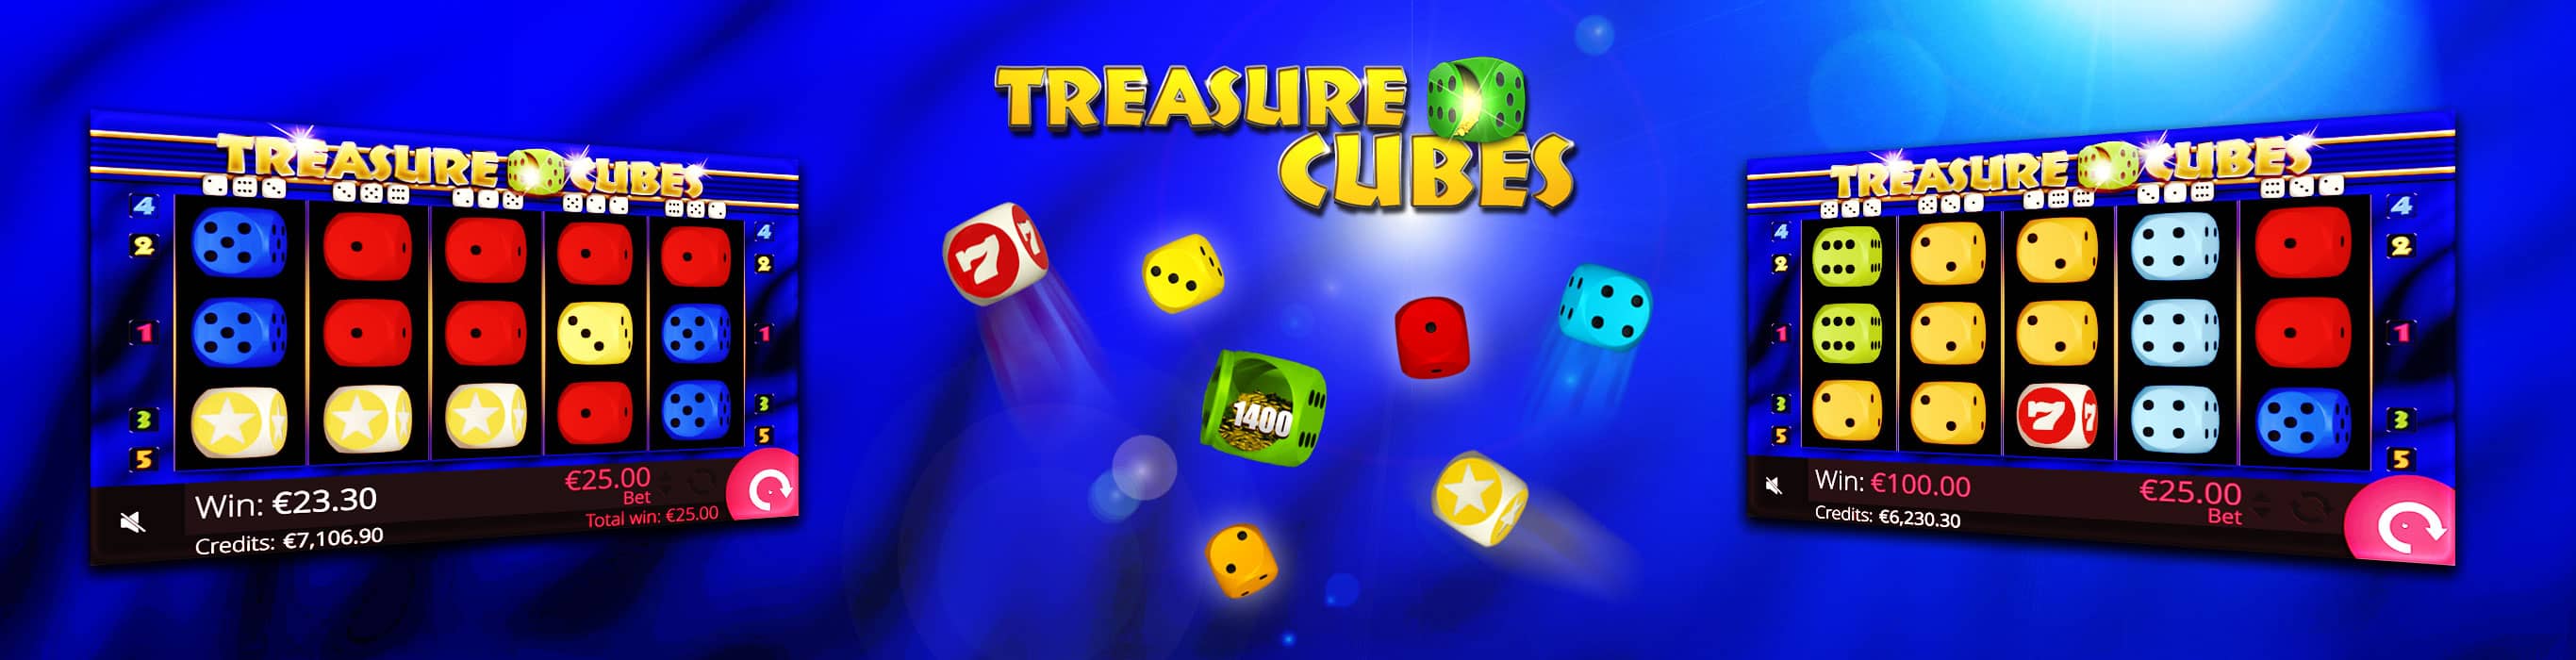 treasurecubes-banner-2732x700-v2